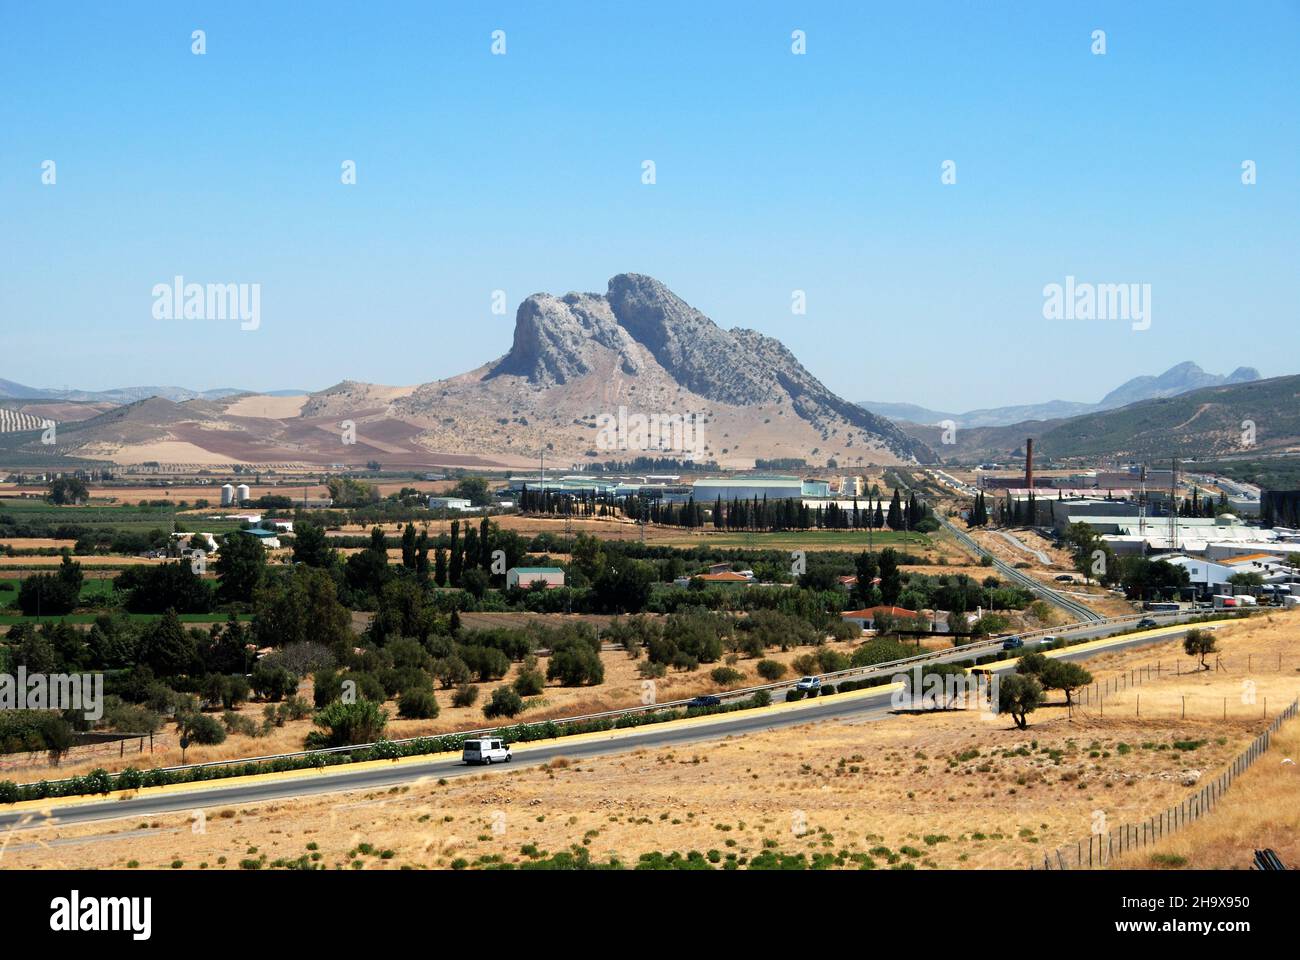 View of the Lovers Rock (La Peña de los Enamoradas) and surrounding countryside, Antequera, Spain. Stock Photo